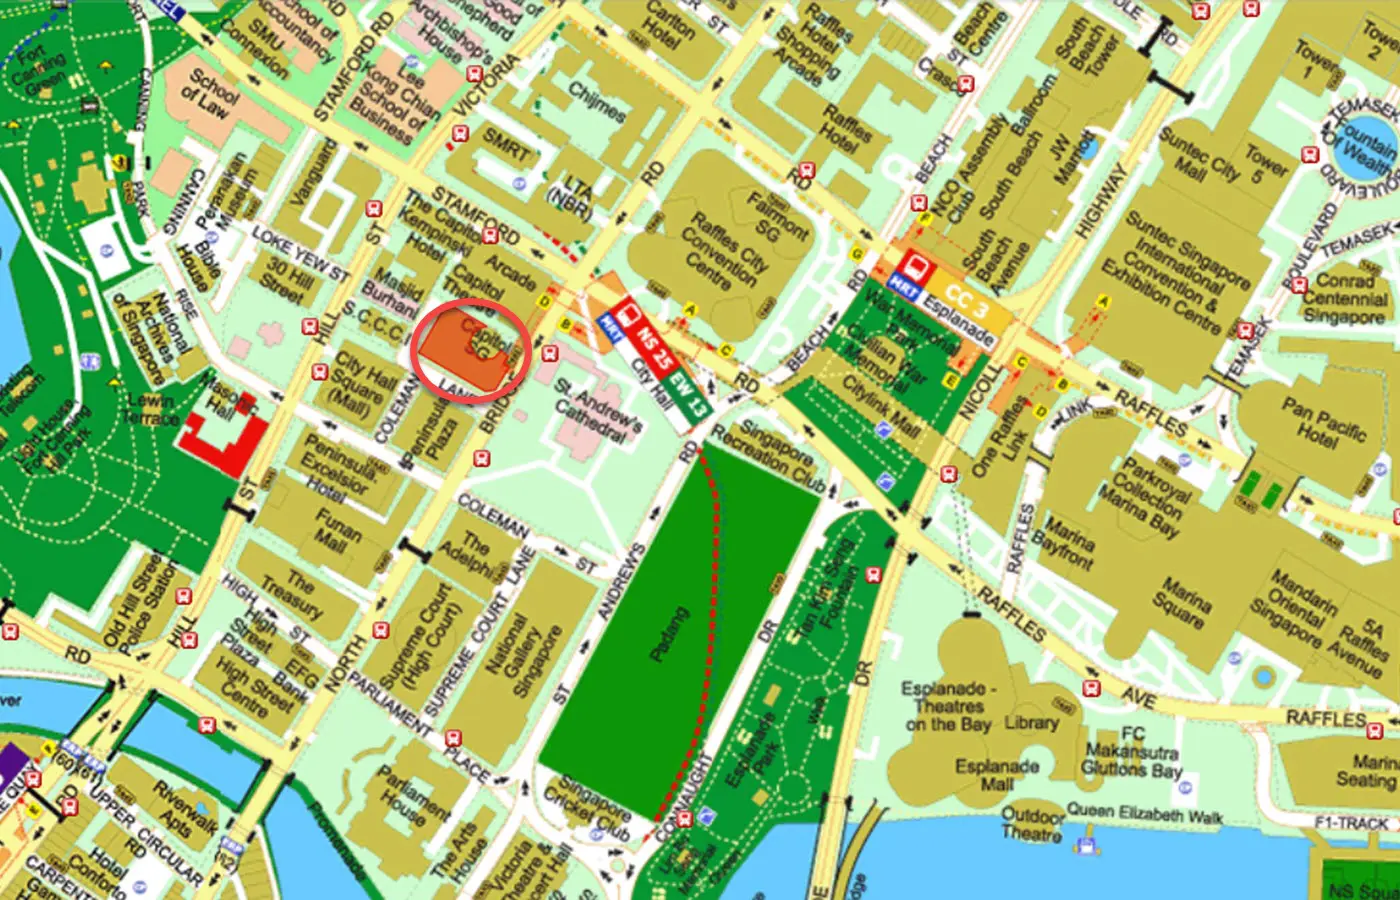 Eden Residences Capitol Condo Location - Street Directory Map